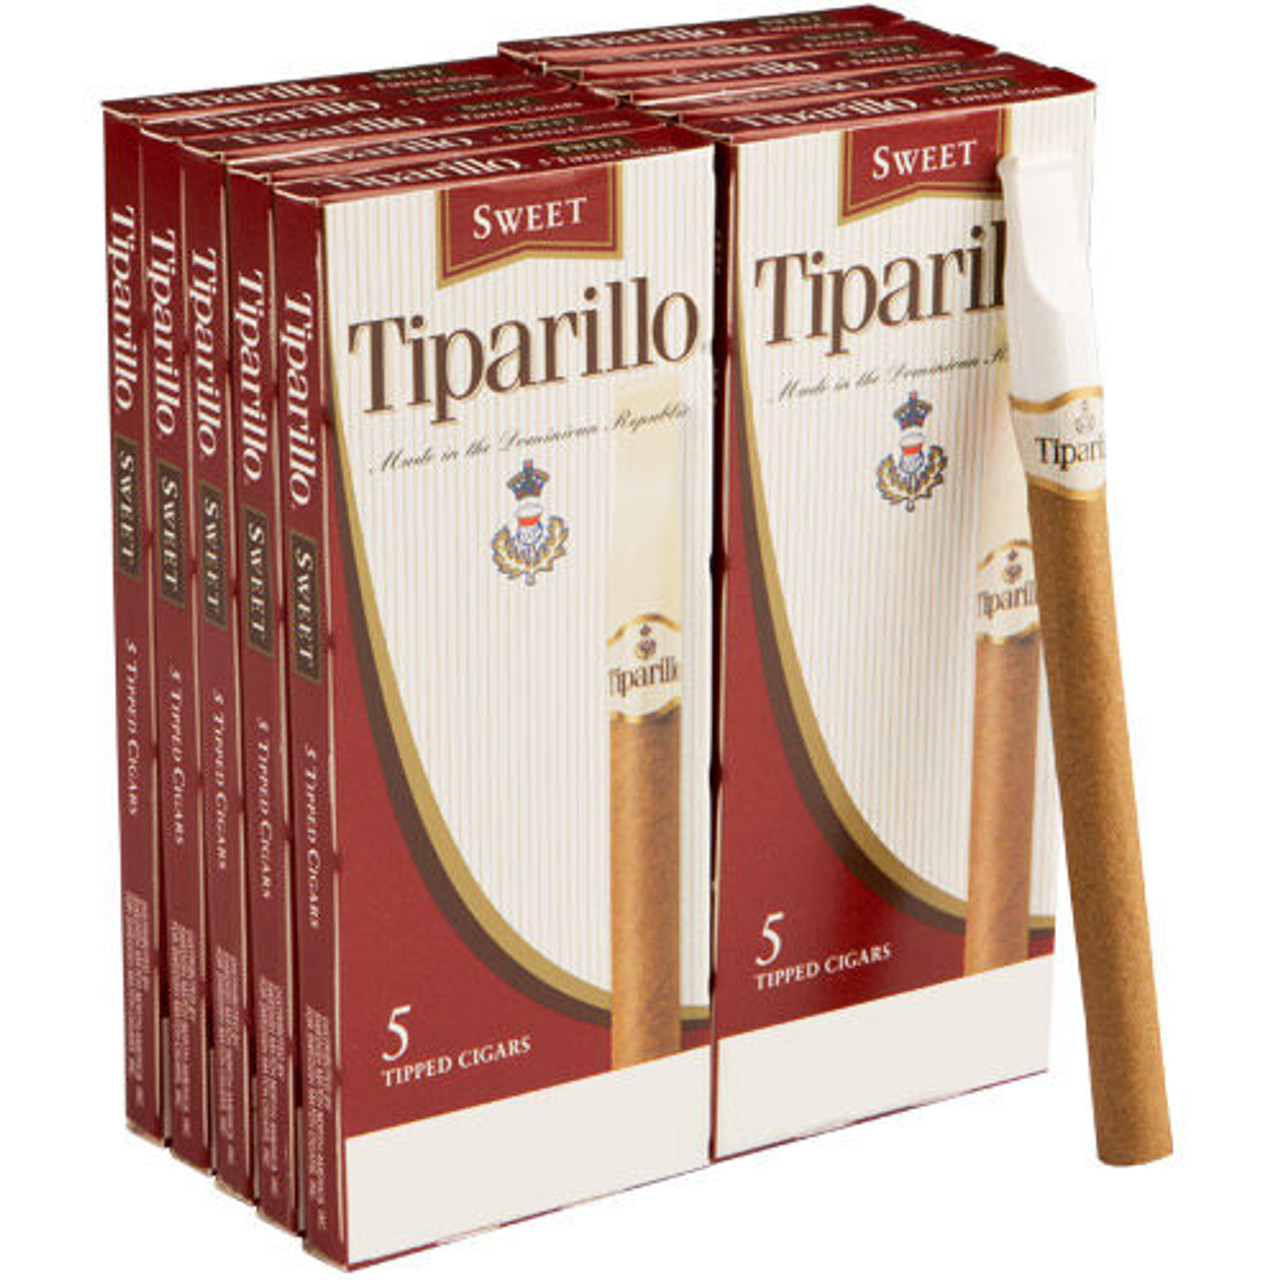 Tiparillo Sweet Cigars - 5 x 30 (10 Packs of 5) *Box